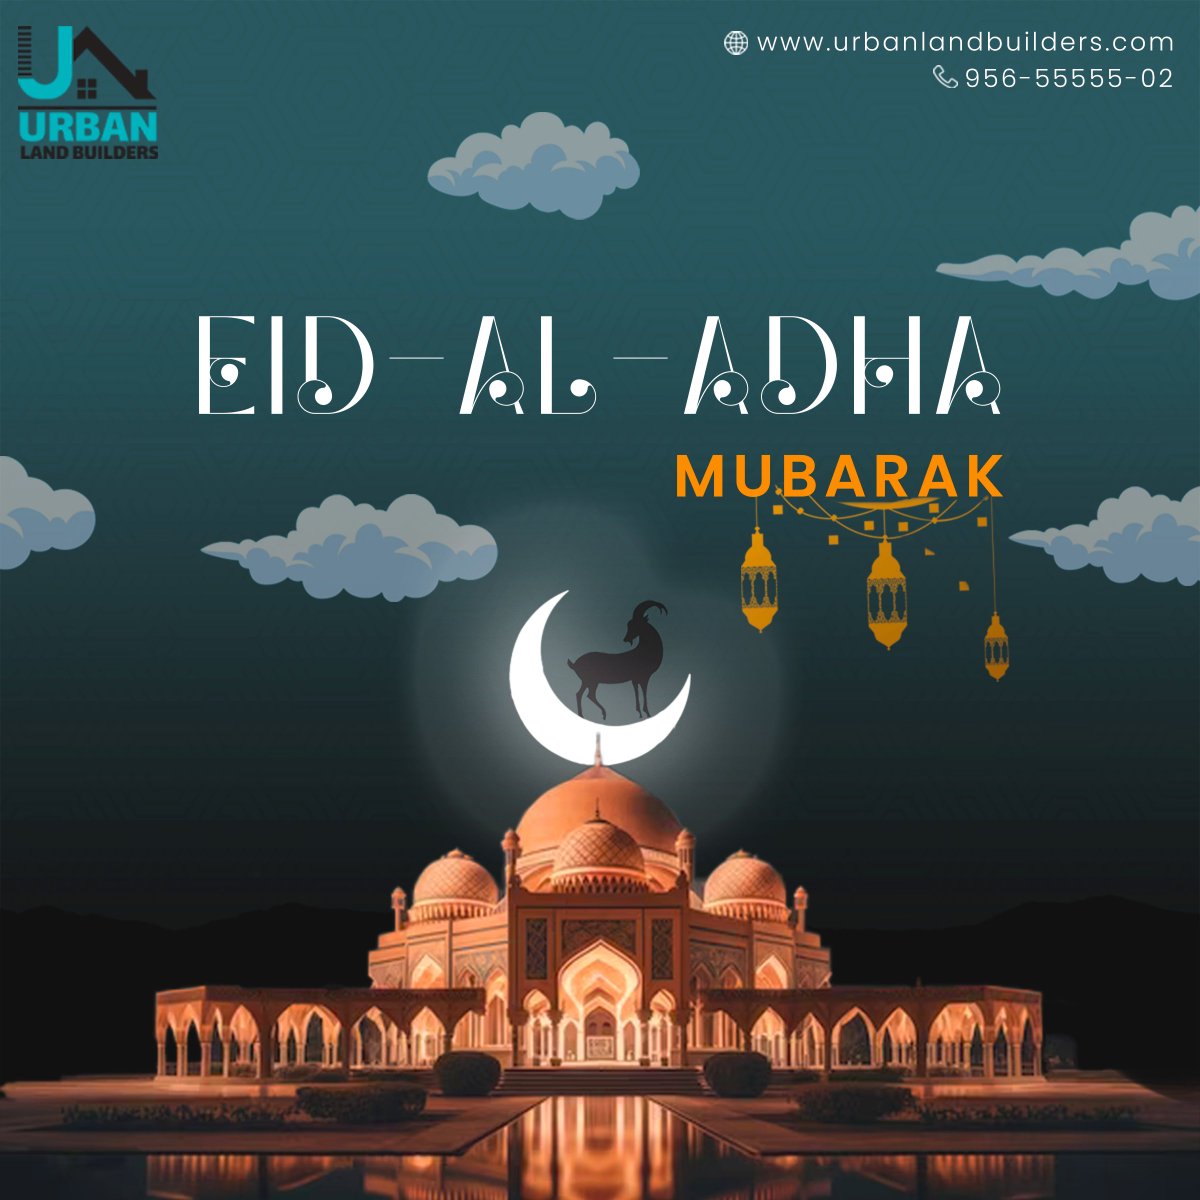 Wishing you all a blessed Eid-al-Adha filled with blessings, joy, and merriment.

#EidAlAdha #EidMubarak #Eid #EidUlAdha #EidUladha2023 #UrbanLandBuilders #realestate #homesforsale #khararproperty